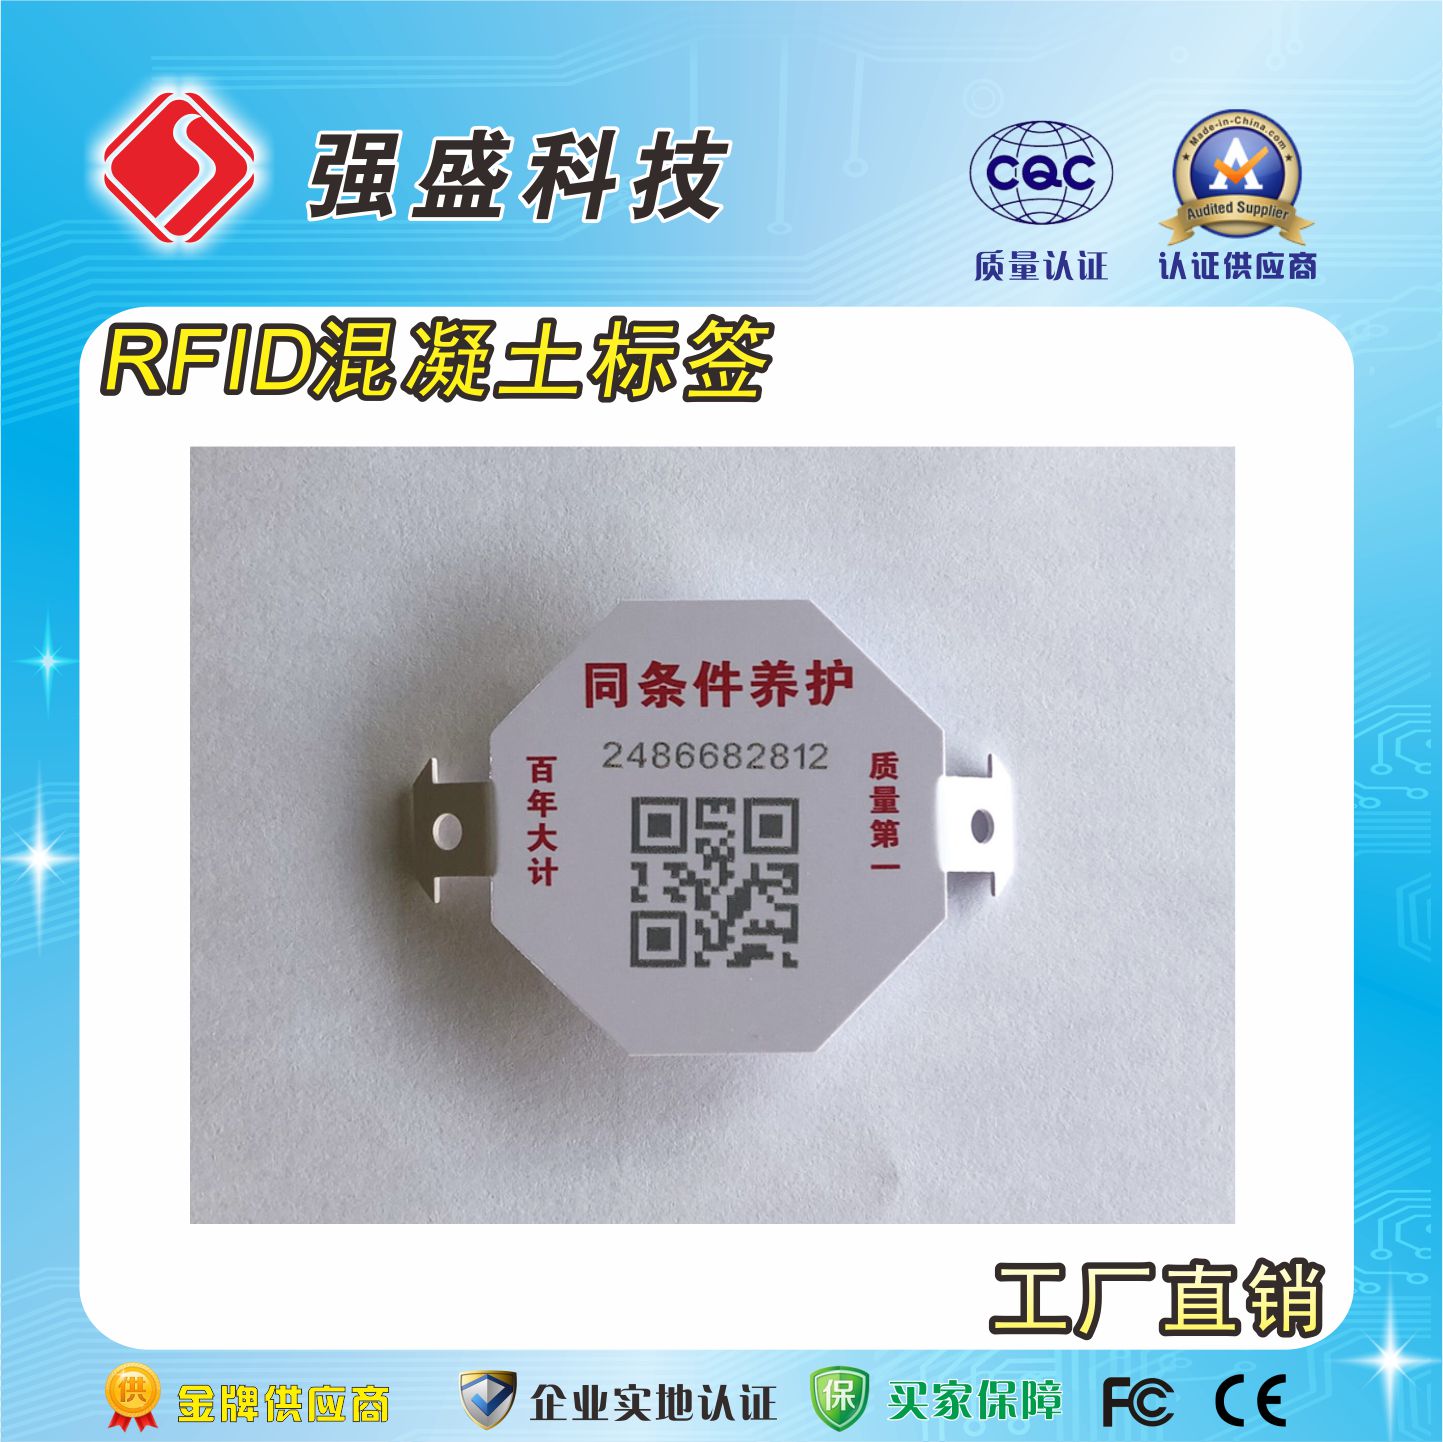 RFID混凝土电子标签价格 广州混凝土试块植入芯片供应商 水泥植入电子标签厂家2